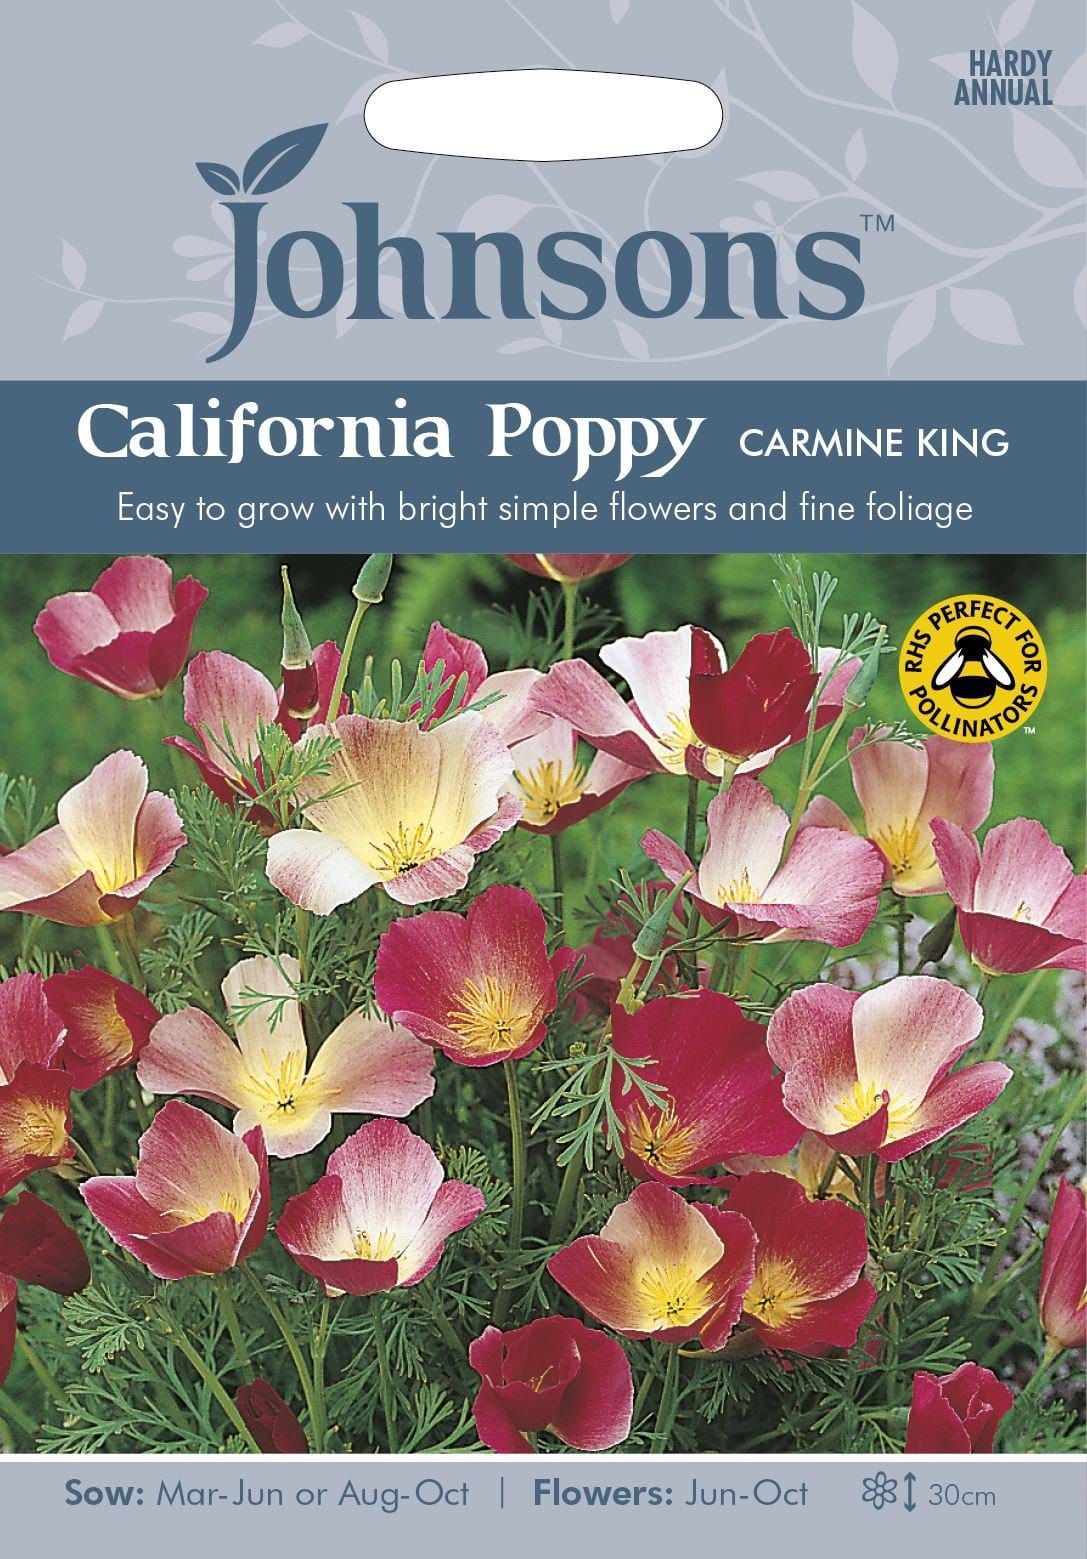 Johnsons California Poppy Carmine King 300 Seeds